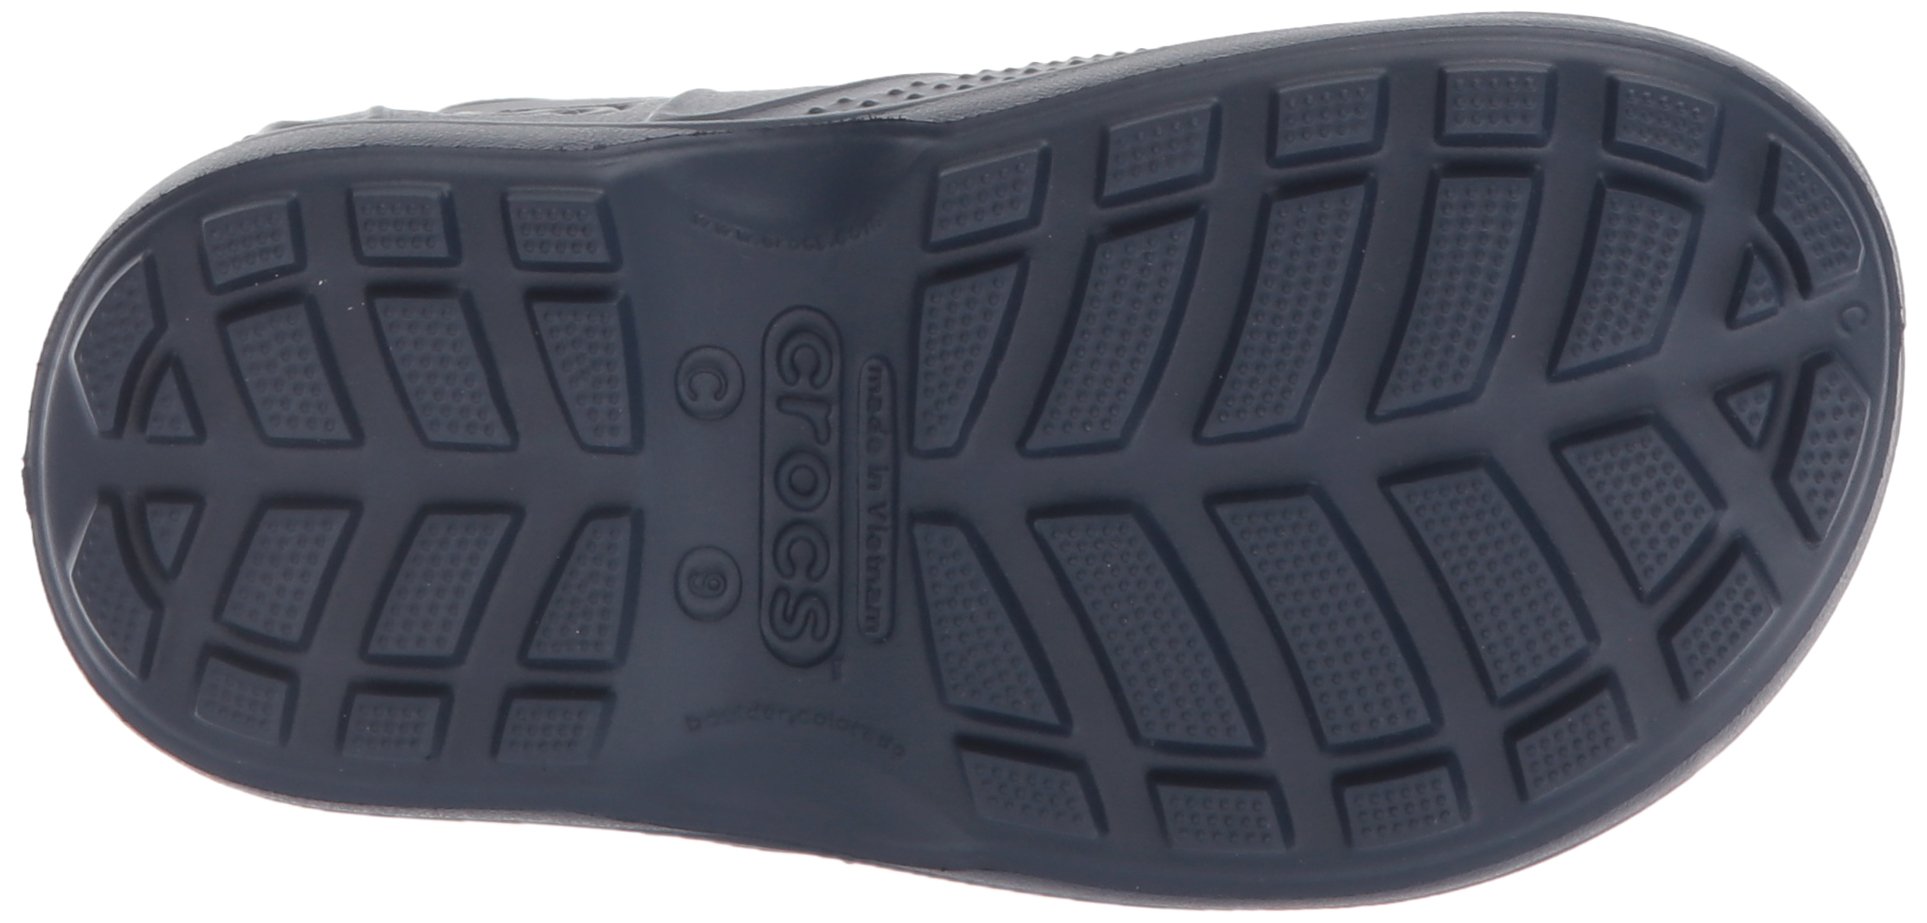 Crocs Unisex-Child Handle It Rain Boots